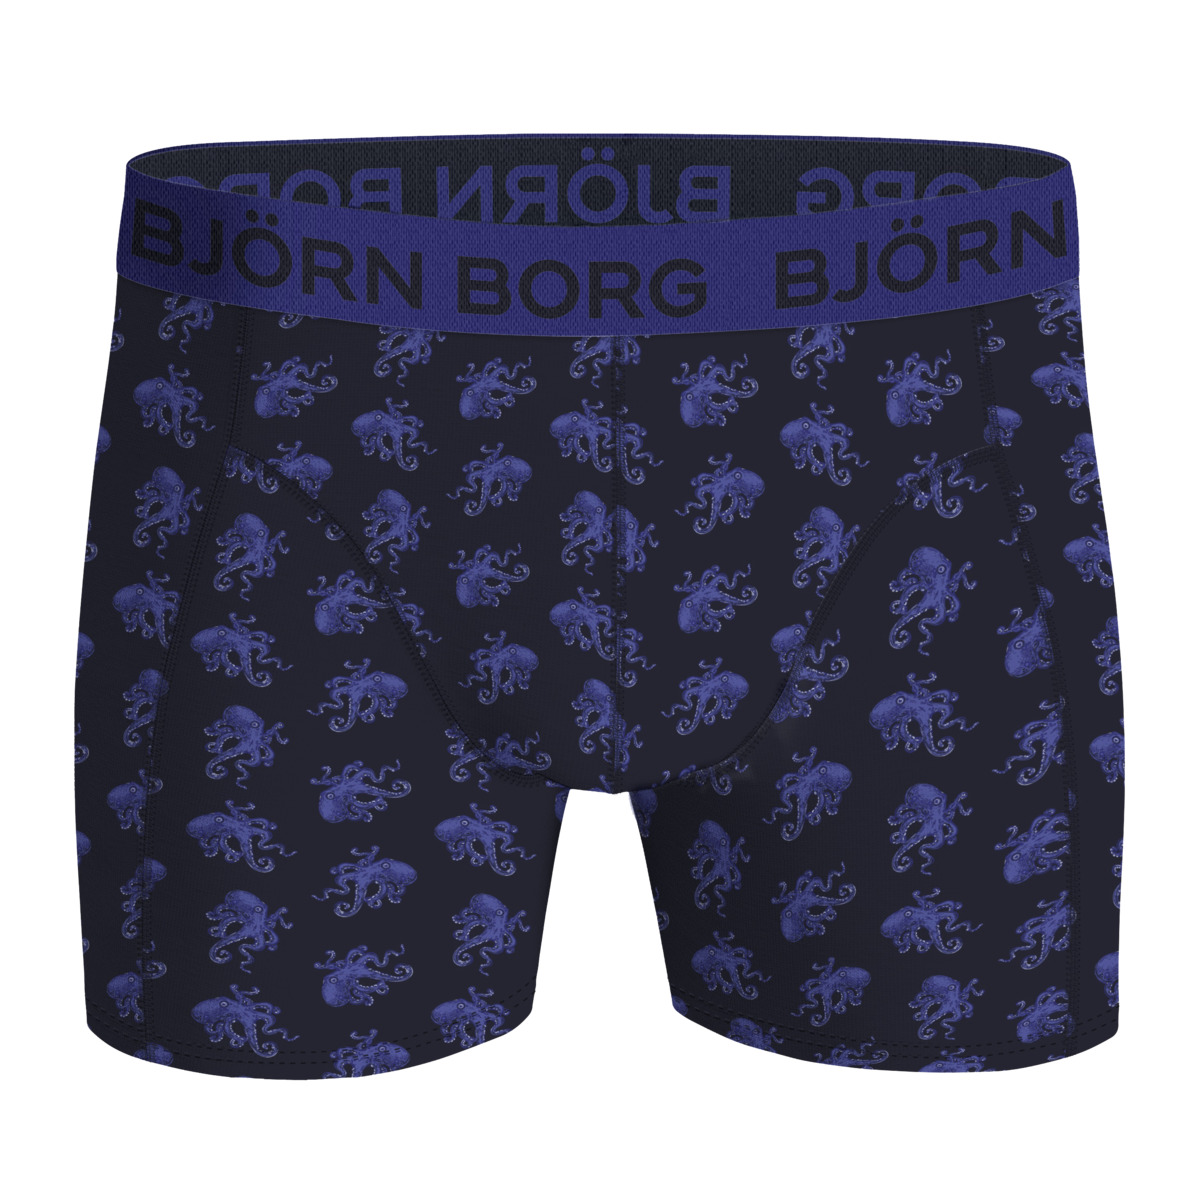 Björn Borg Cotton Stretch Boxer 7er Pack Boxershorts multicolor